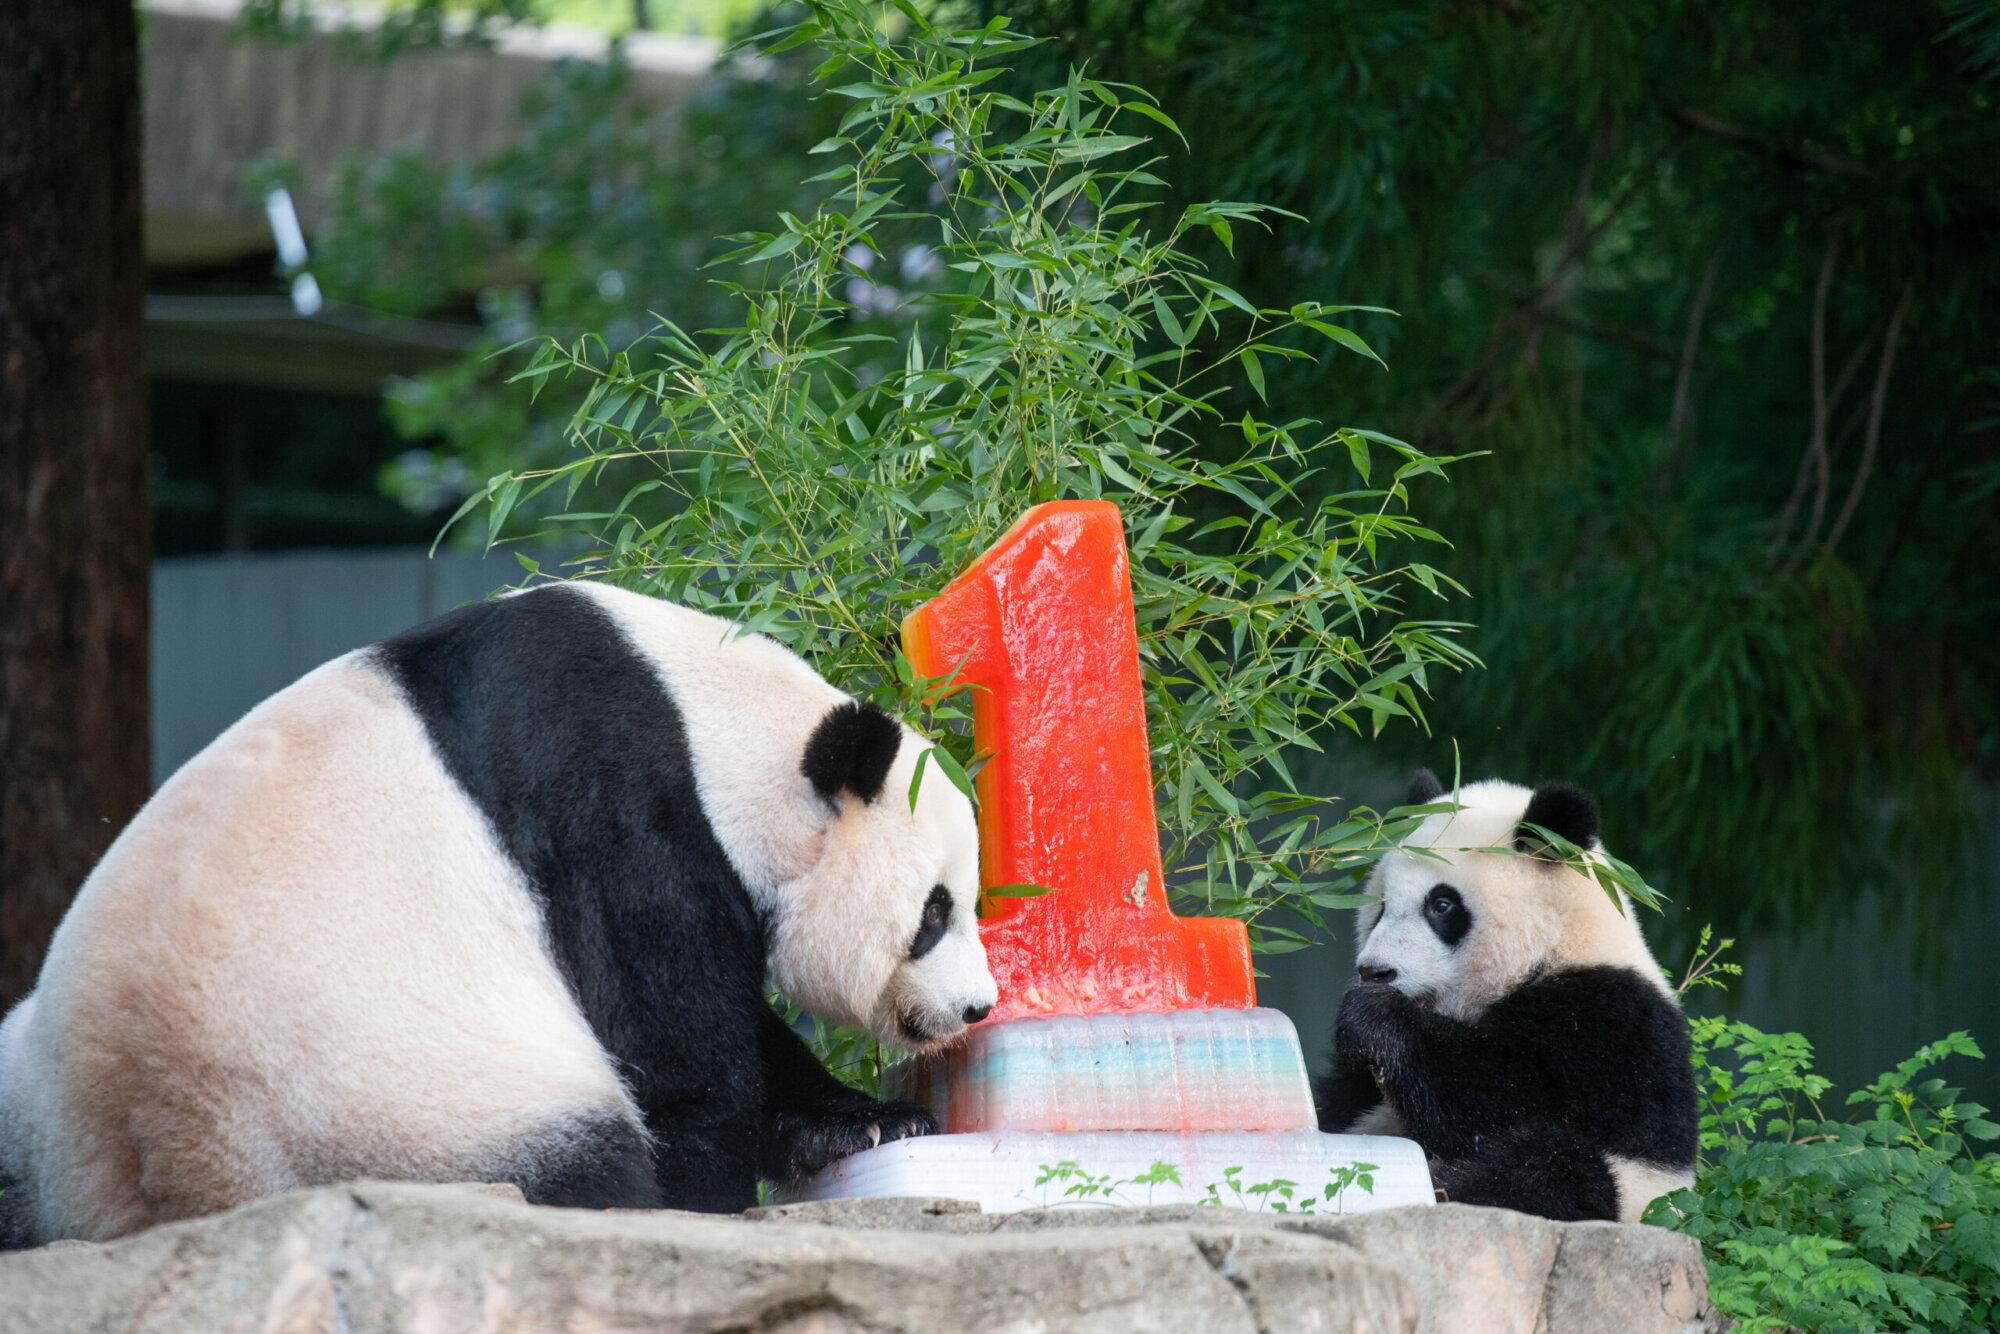 50 years of 'adorable antics': National Zoo celebrates giant pandas - WTOP  News